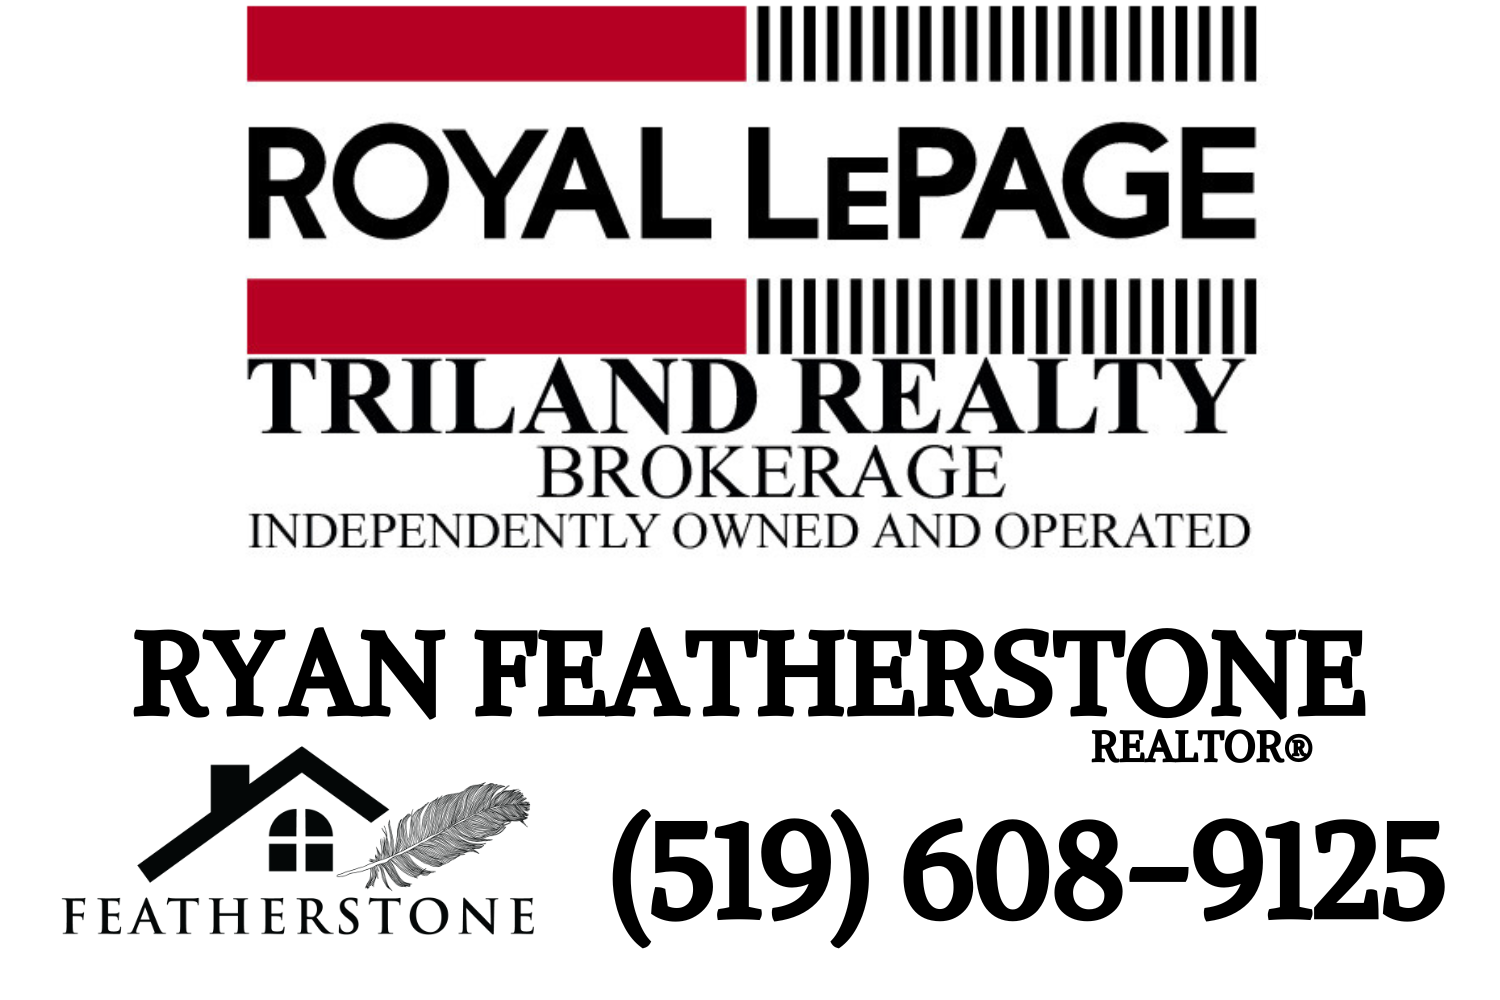 ROYAL LEPAGE TRILAND REALTY BROKERAGE - Ryan Featherstone